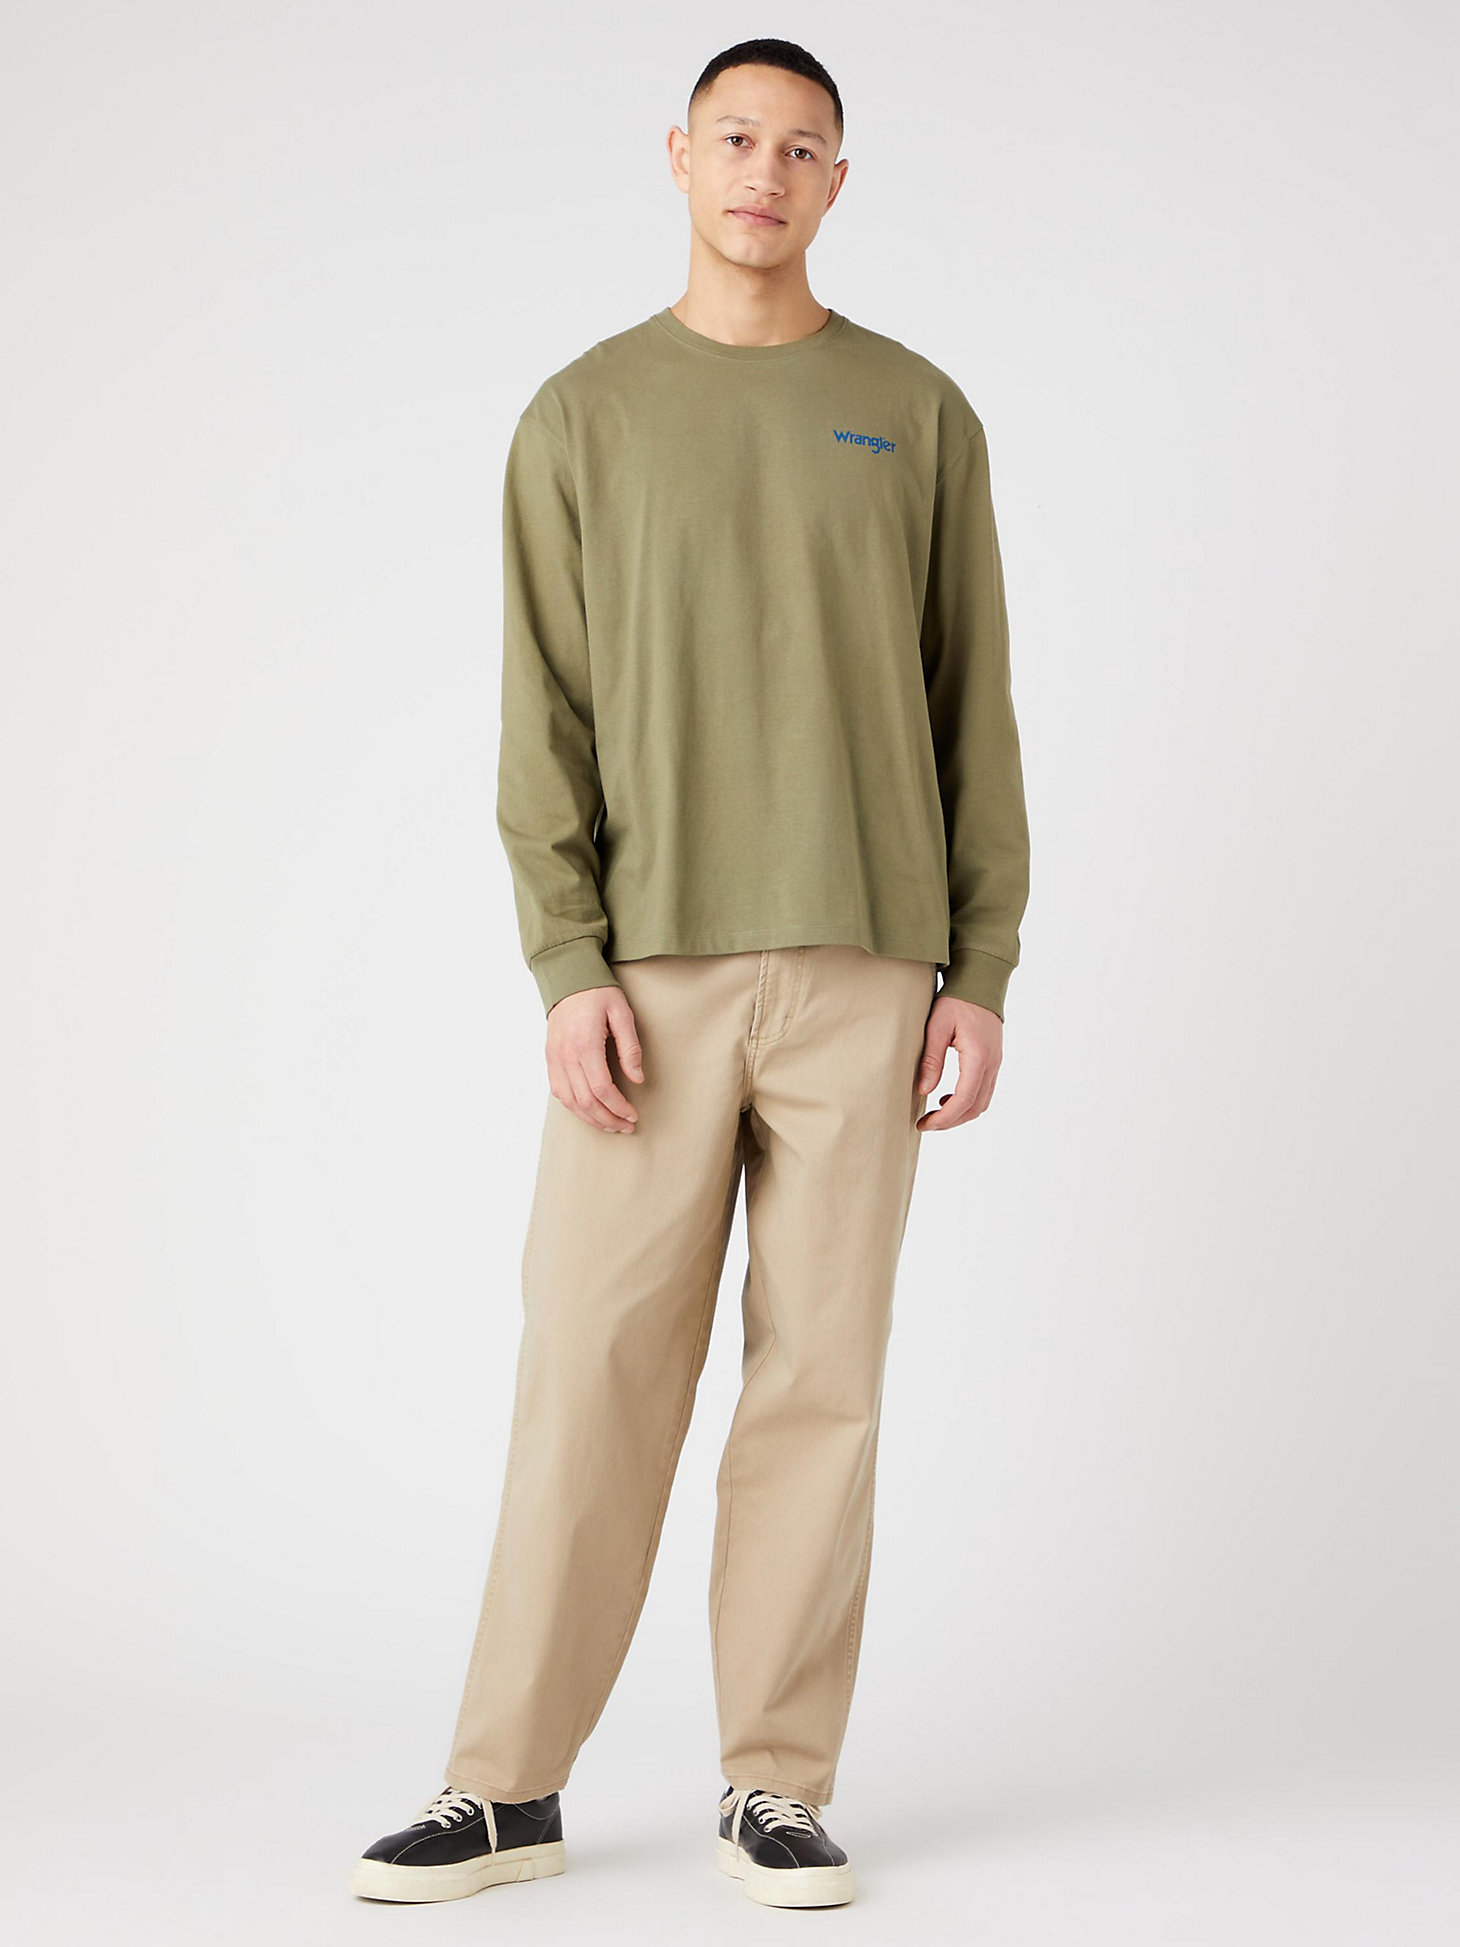 Men's Casey Jones Vintage Fit T-Shirt in Deep Lichen Green alternative view 4